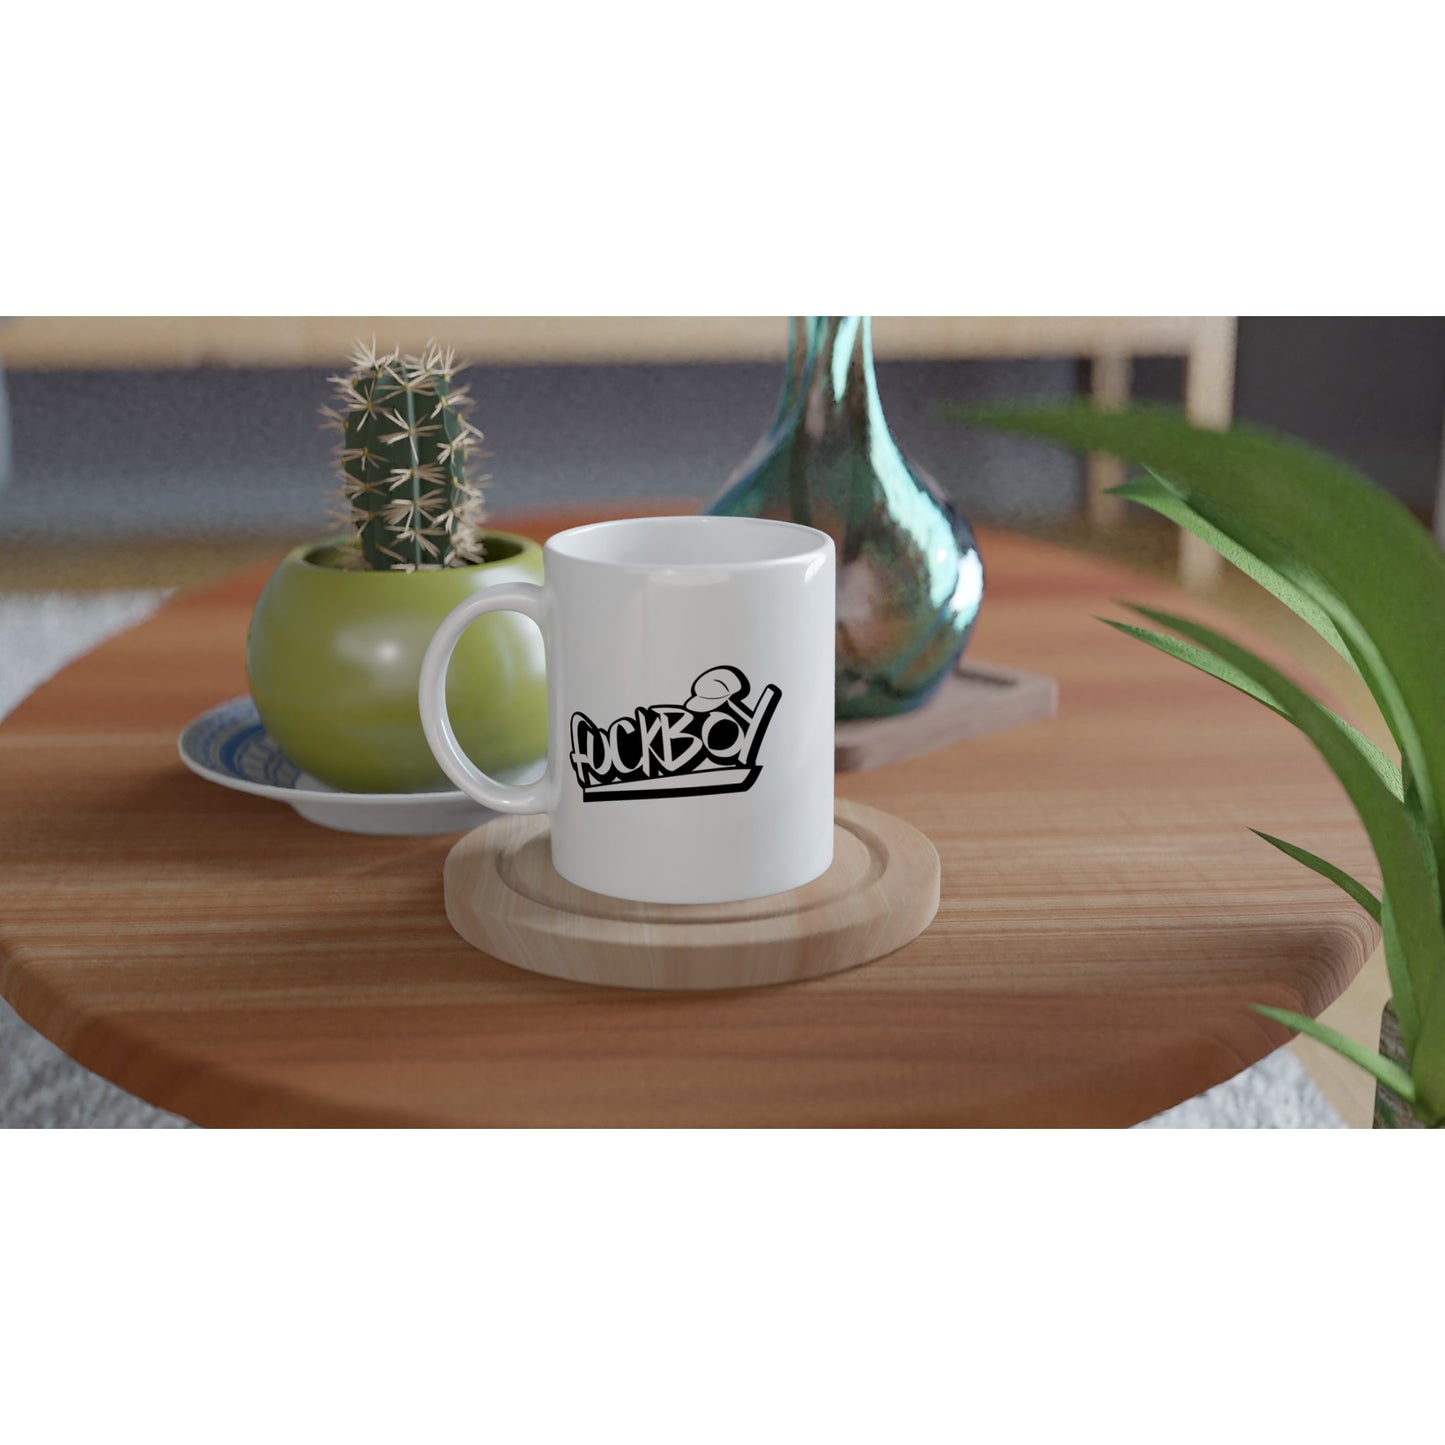 Fuckboy - White 11oz Ceramic Mug - Mister Snarky's